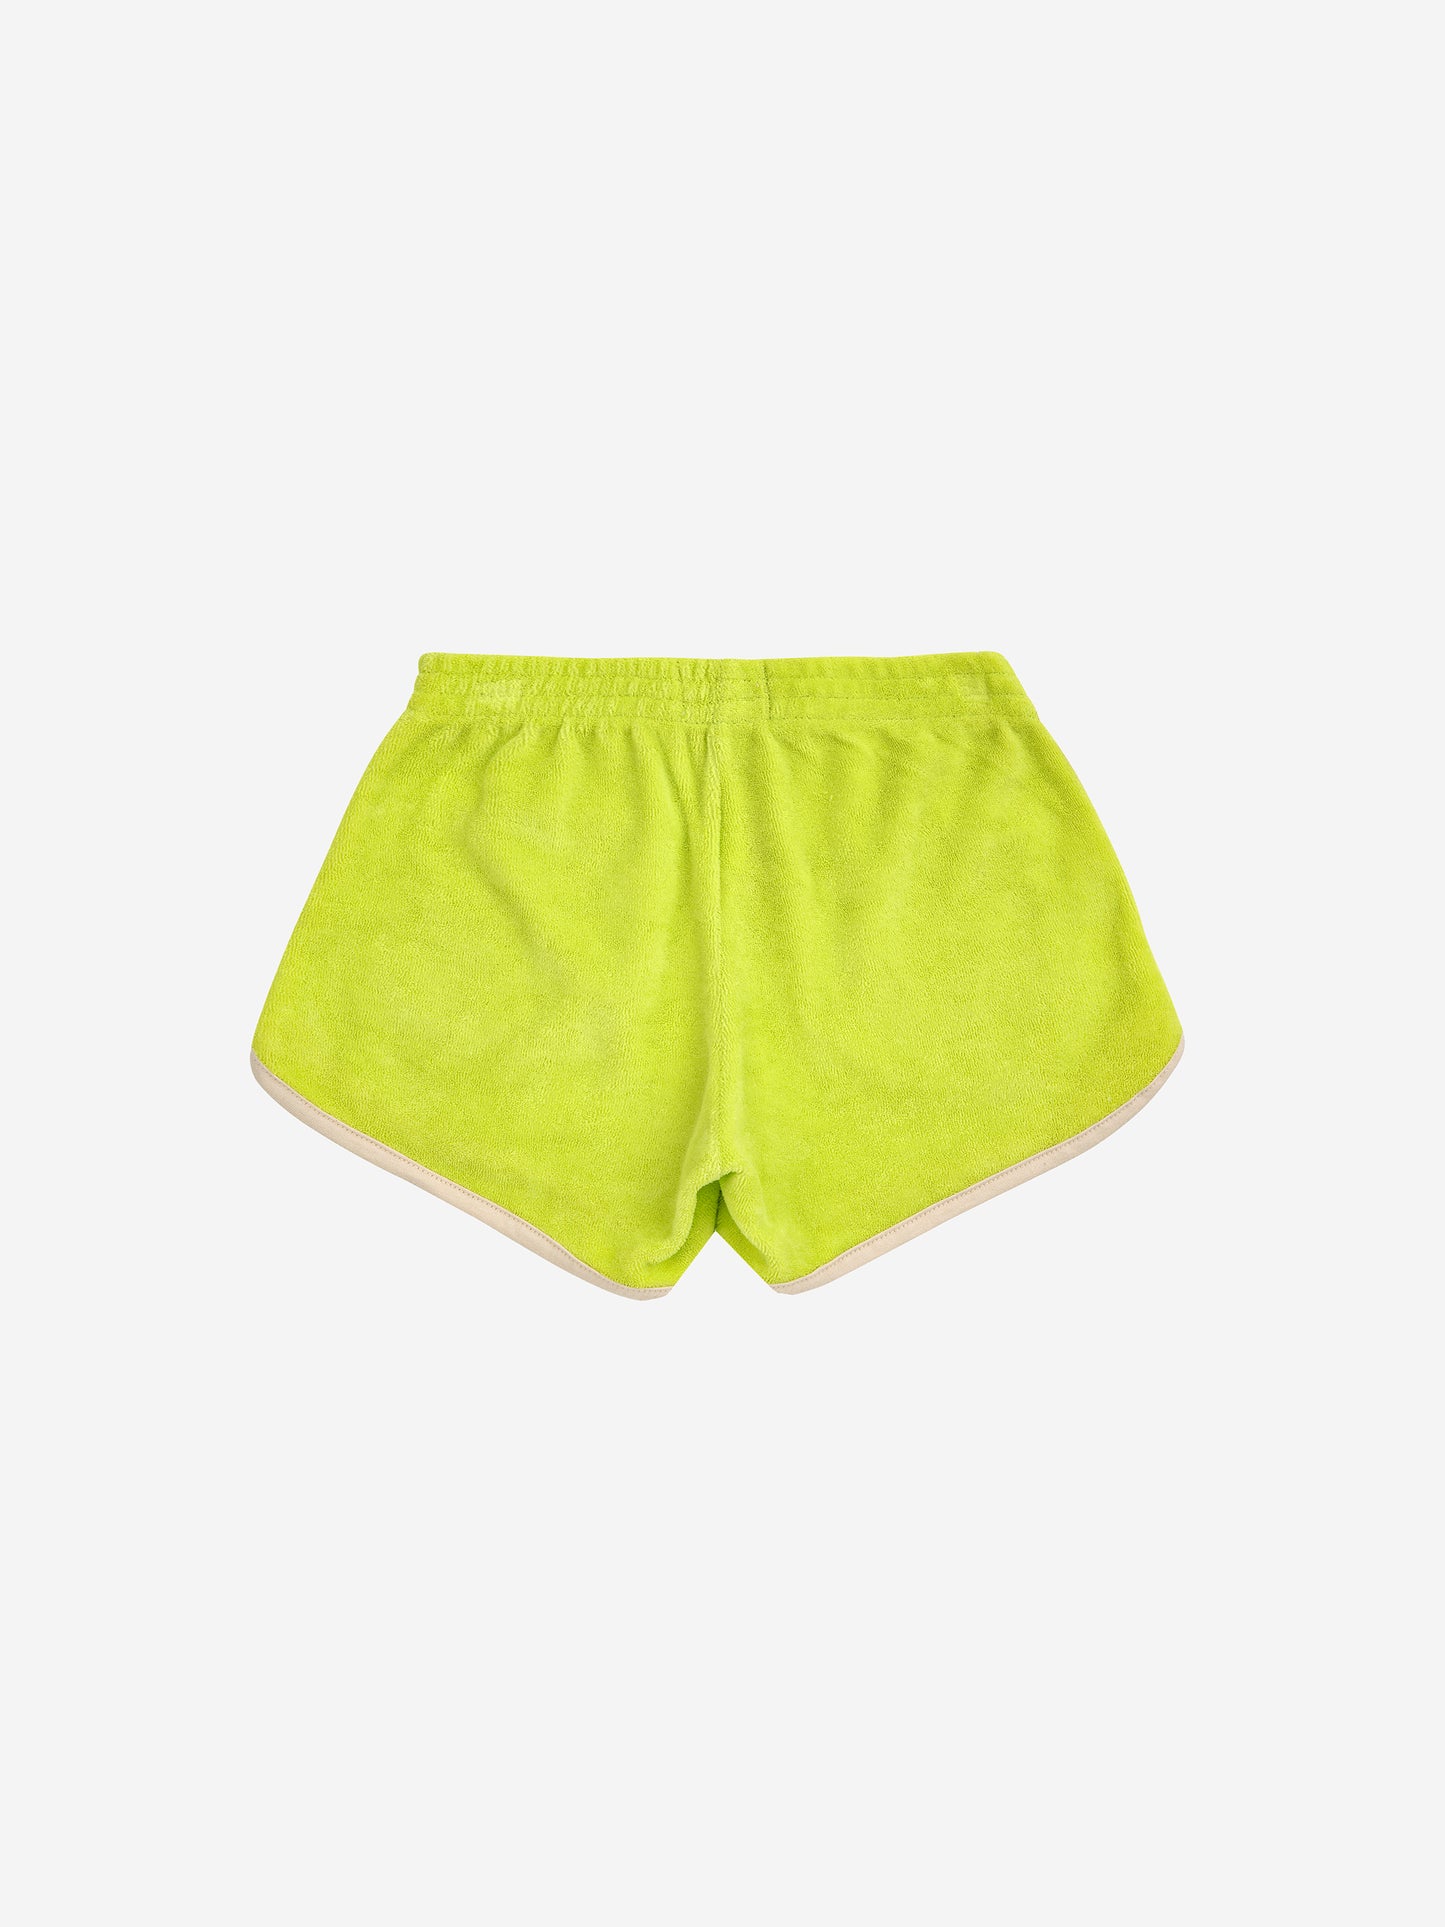 +Bobo Choses+ Green Terry Shorts